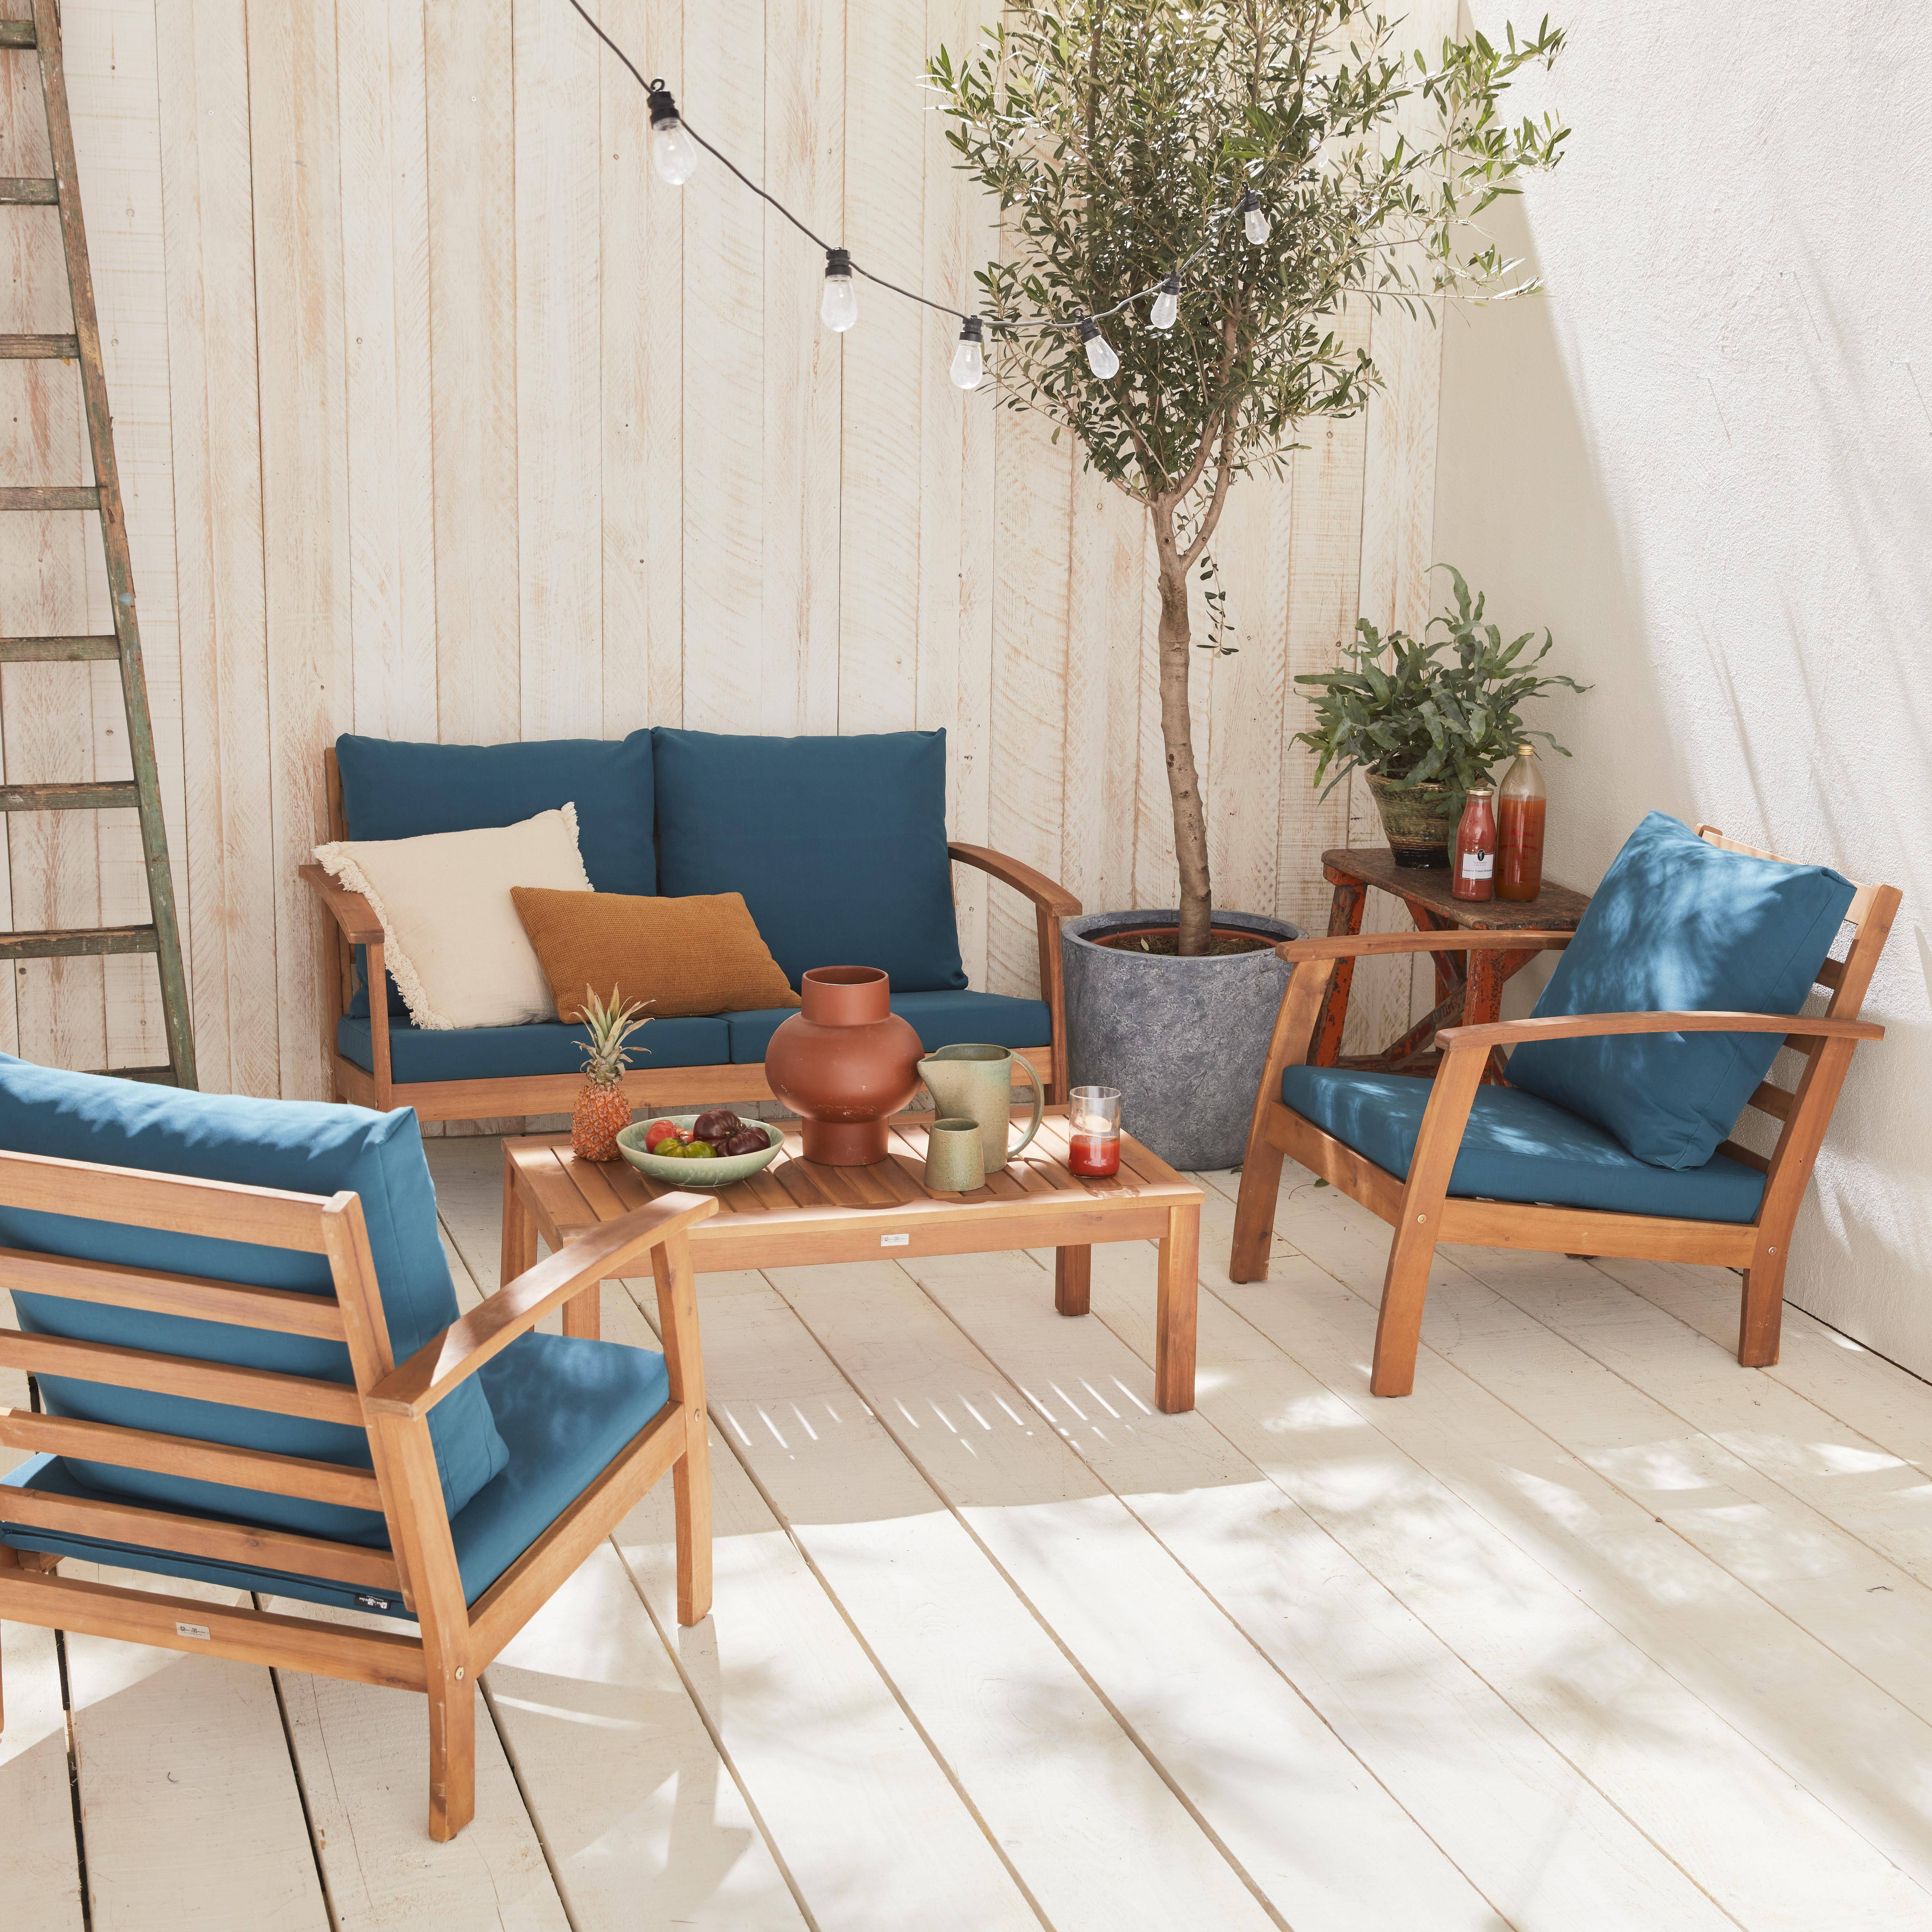 Conjunto de jardín de madera 4 plazas - Ushuaïa - Cojines azul pato, sofá de madera de acacia, sillones y mesa de centro Photo1